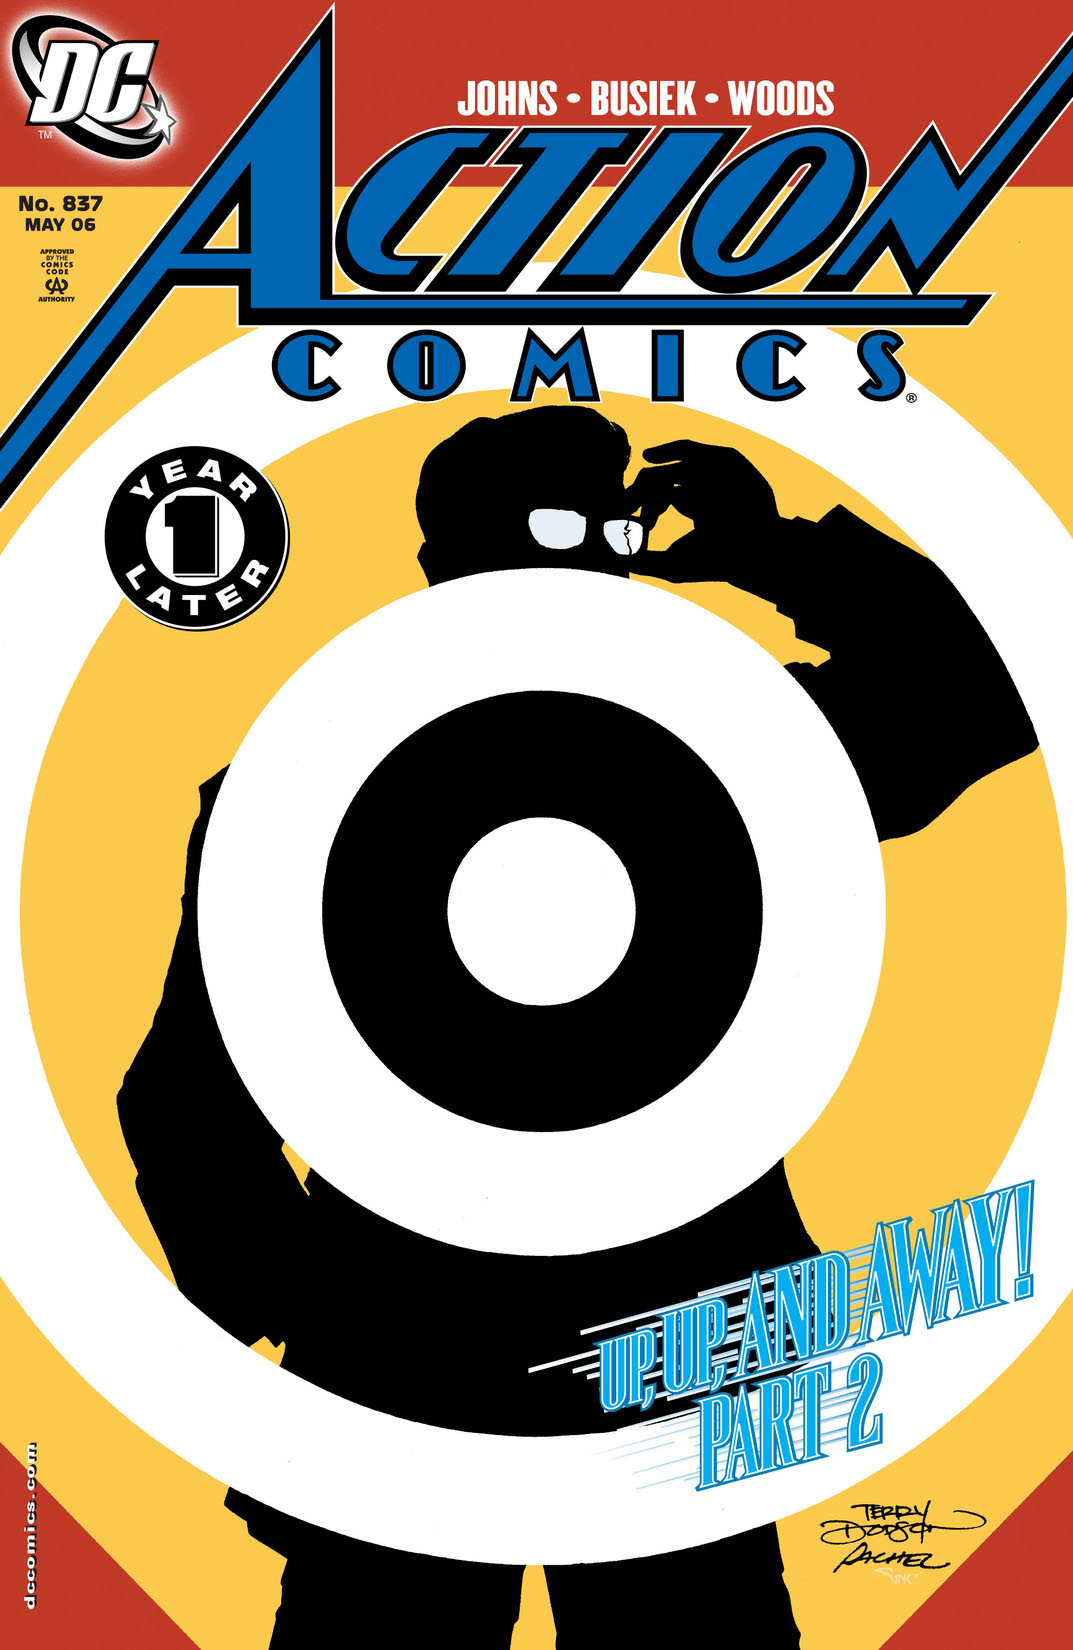 Action Comics (1938-) #837 preview images